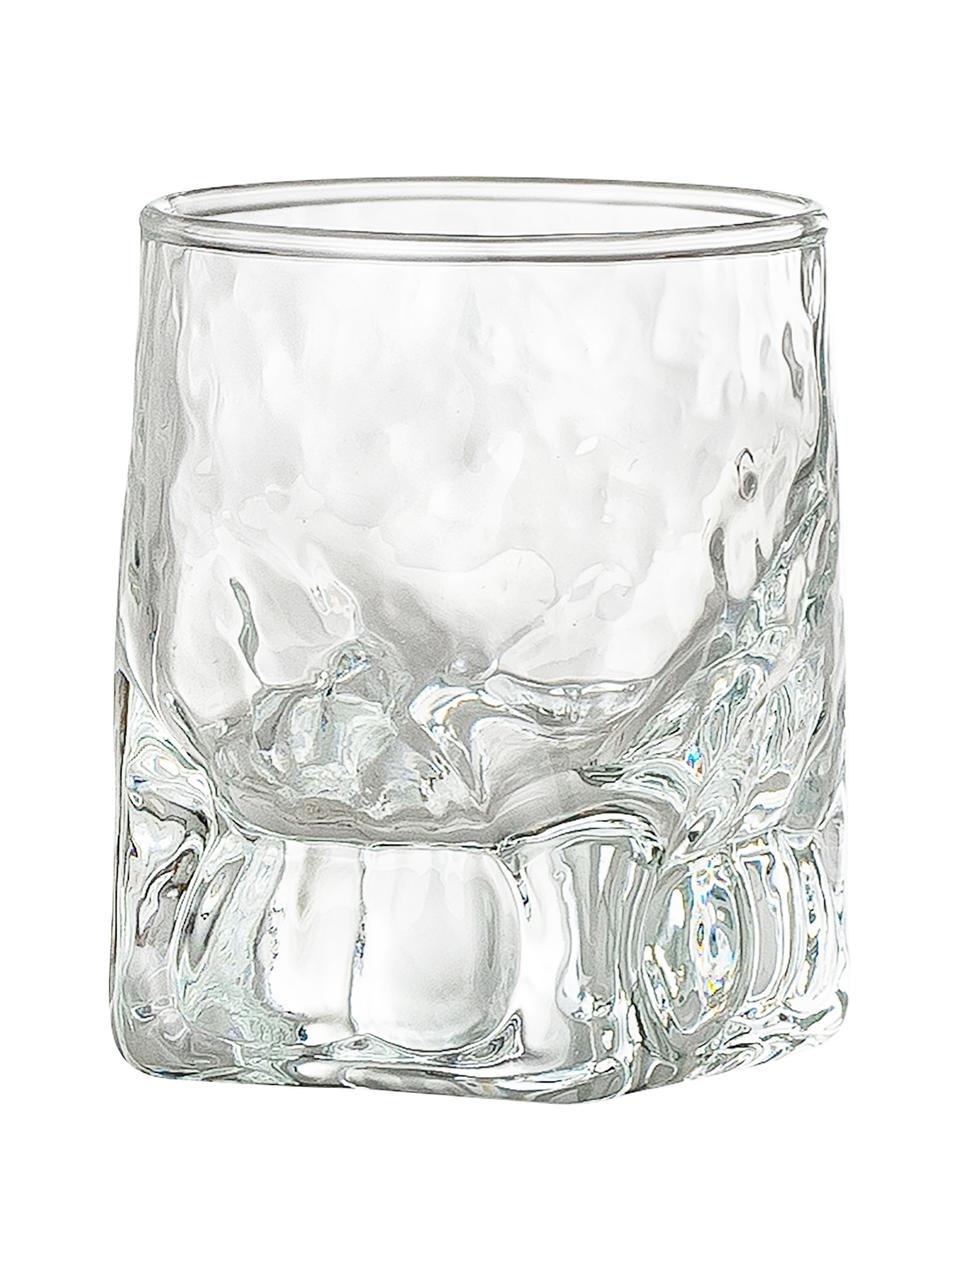 Borrelglaasjes Zera met oneven vorm, 6 stuks, Glas, Transparant, Ø 5 x H 6 cm, 70 ml